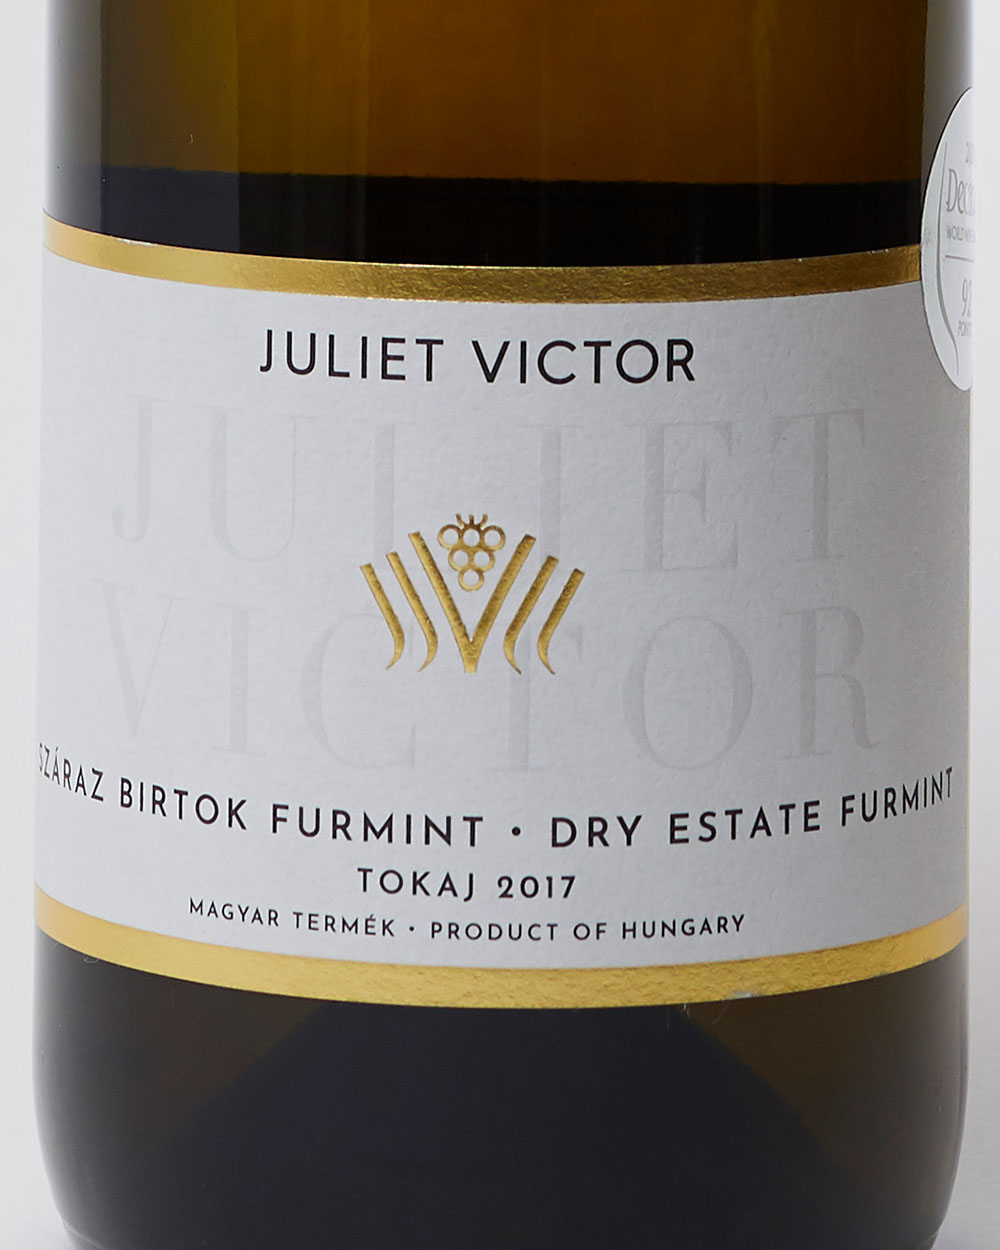 Juliet Victor Szaraz Birtok Furmint Tokaj 2017 label